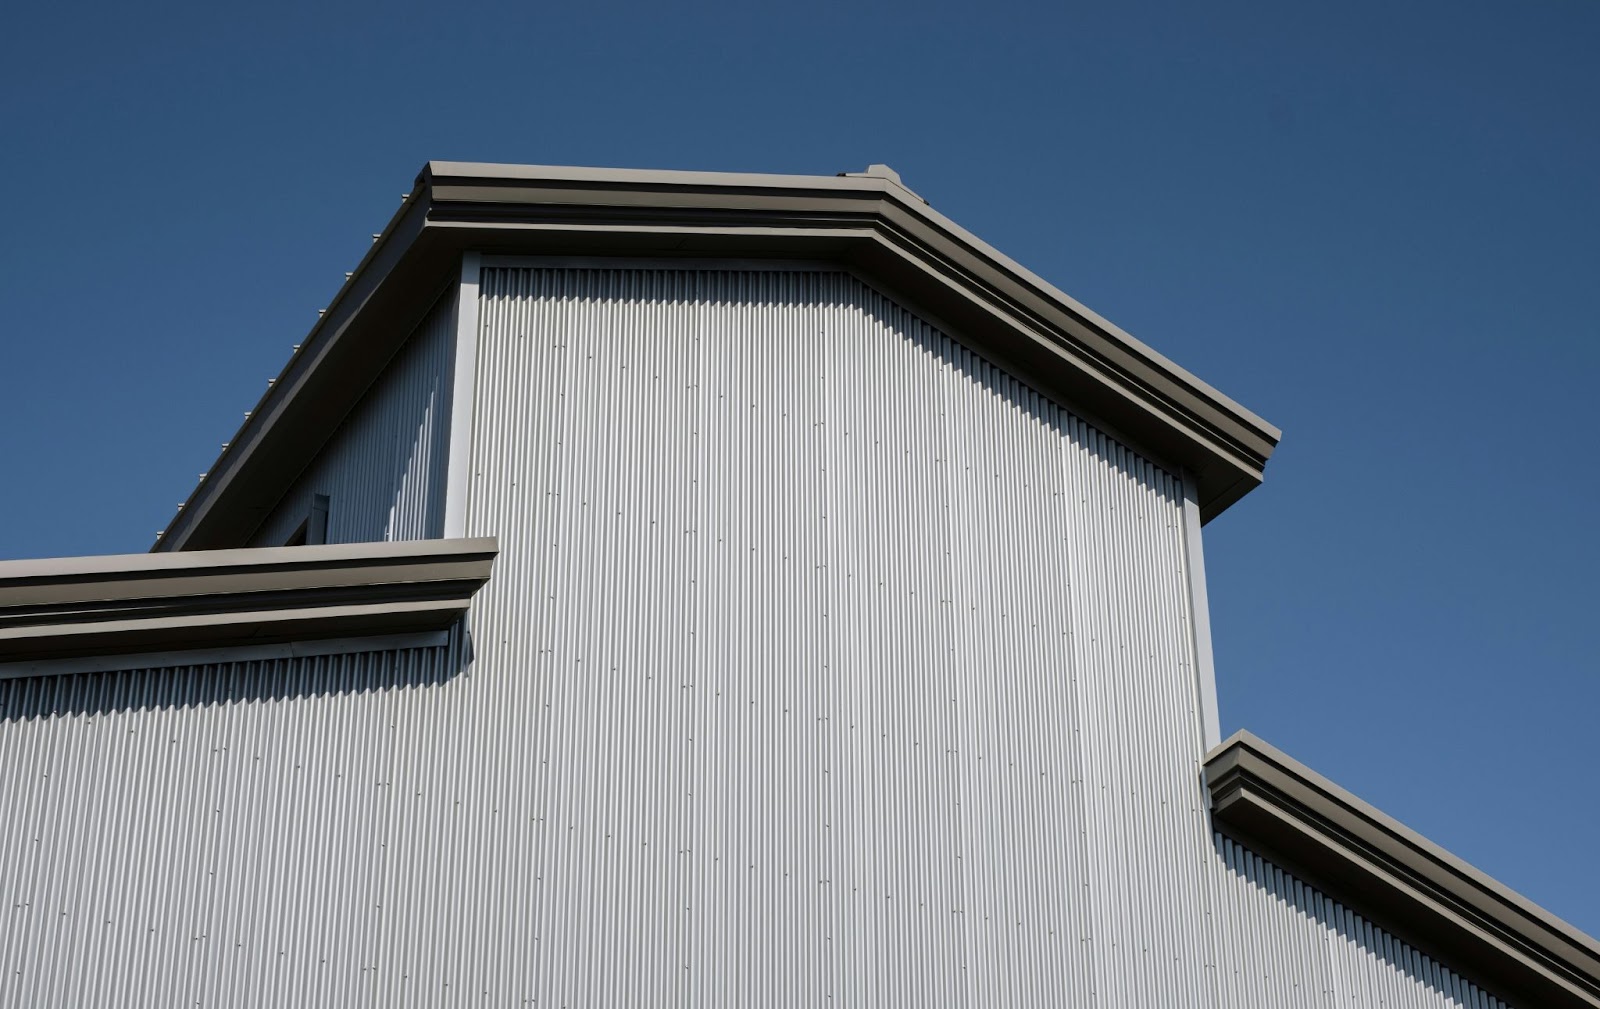 Pole barn vs metal building